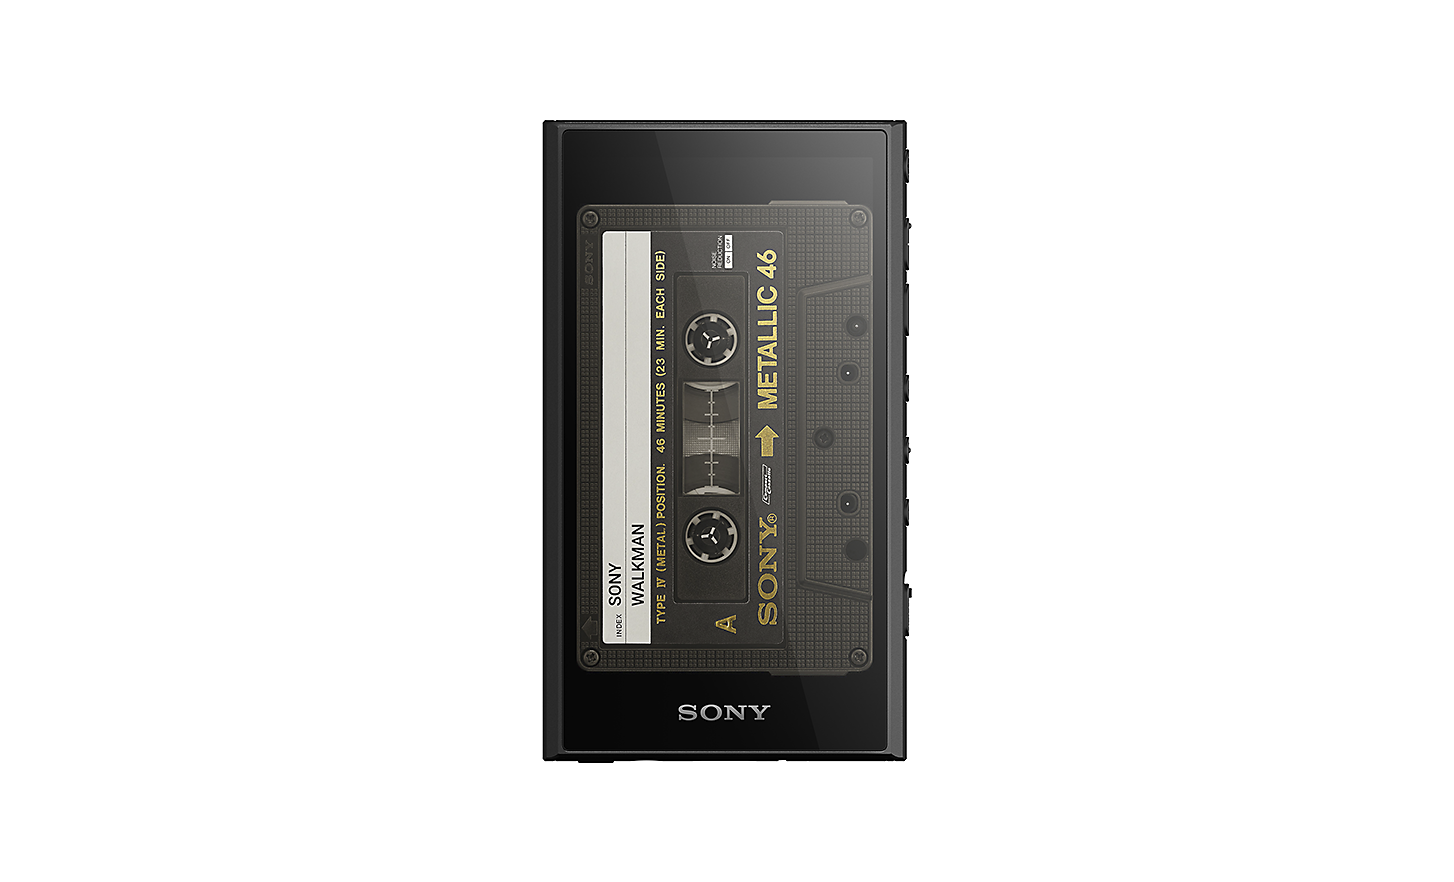 Cassette tape UI